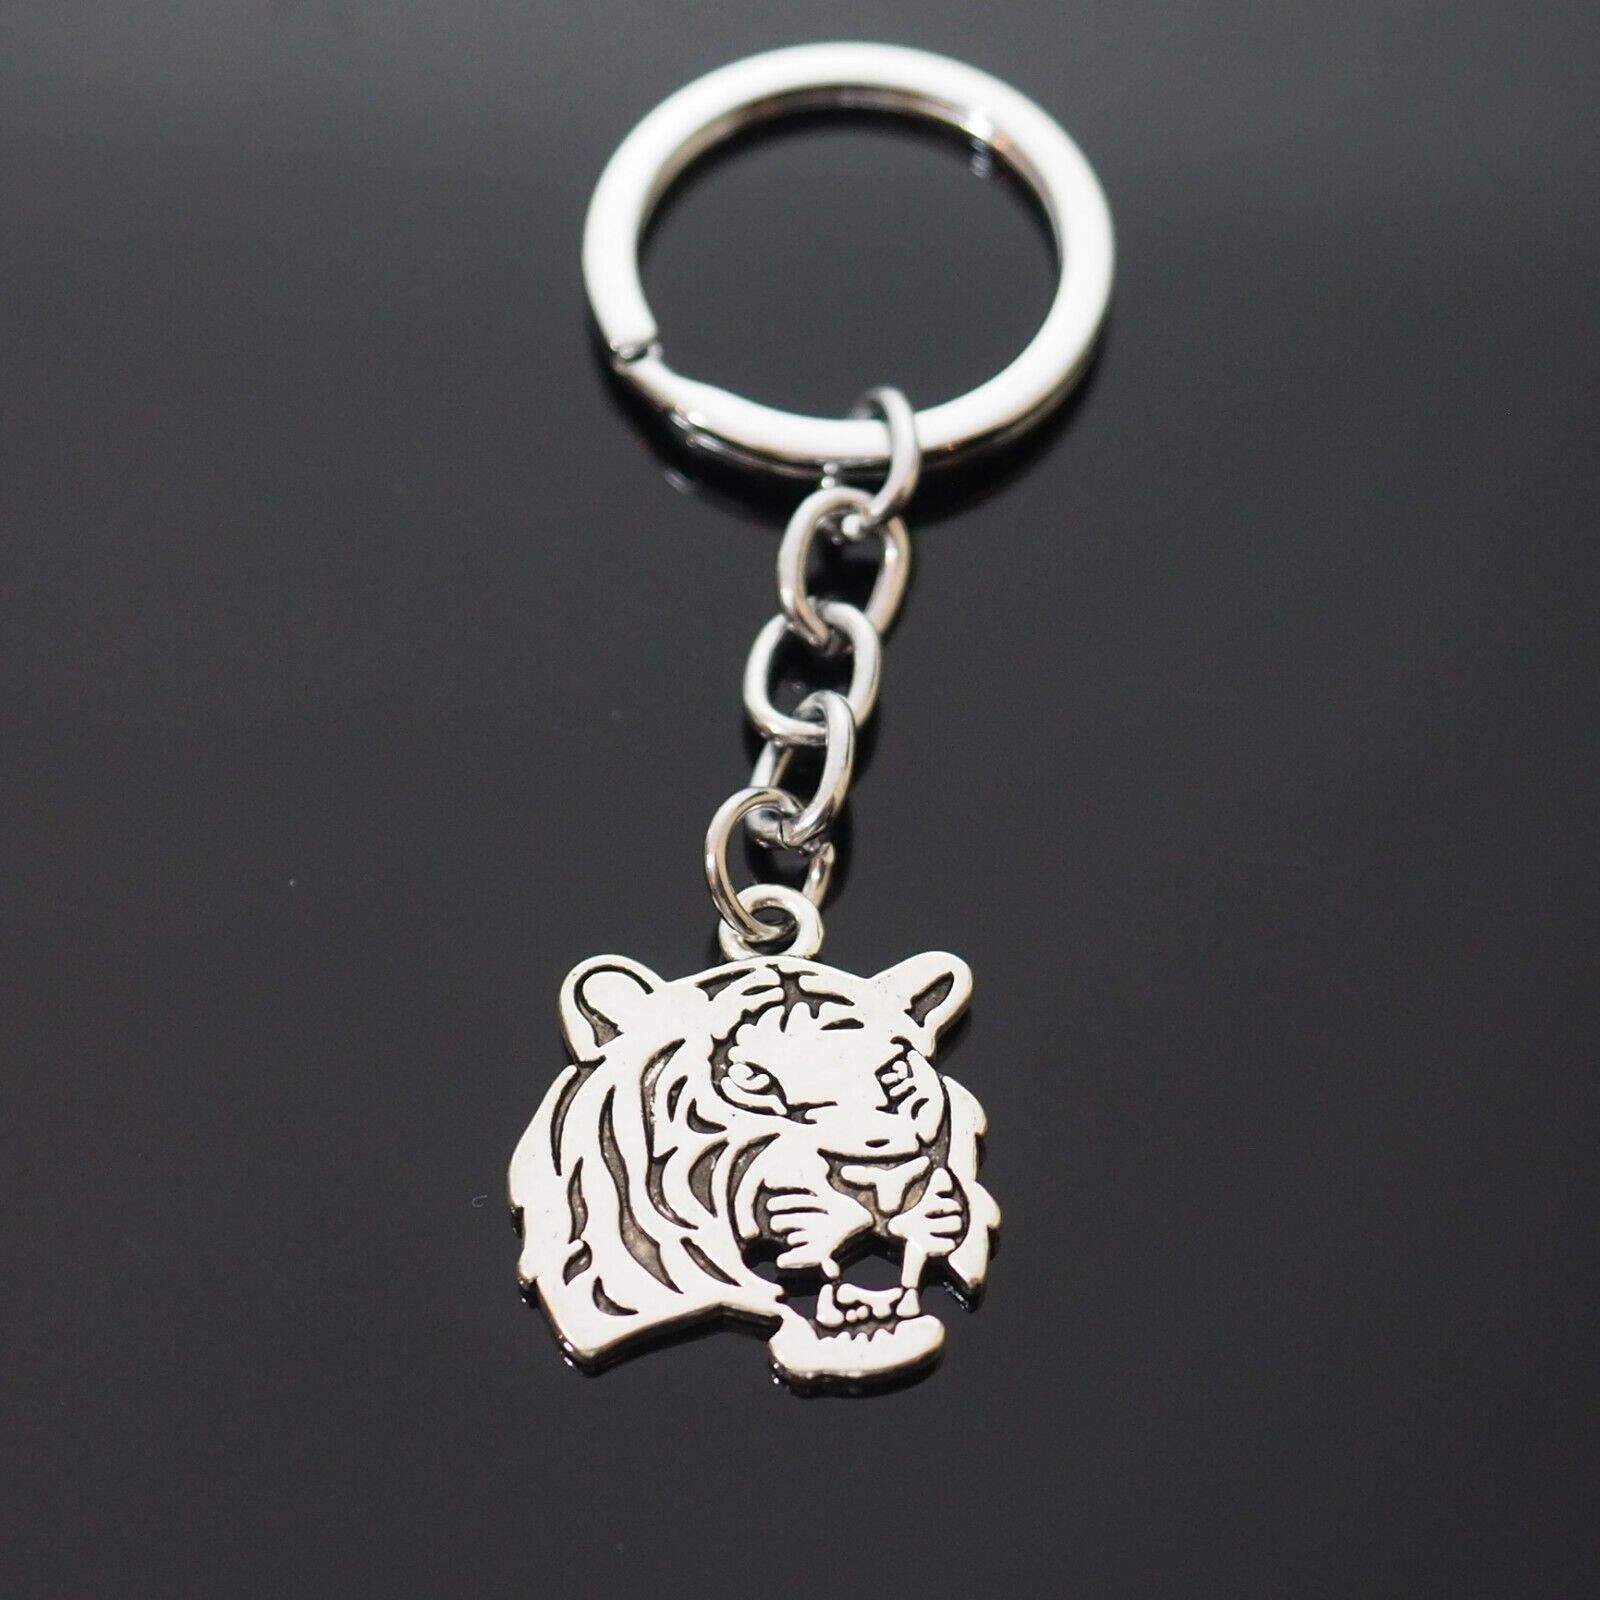 Tiger Head Growl Zoo Africa Animal Silver Pendant Keychain Key Chain Gift